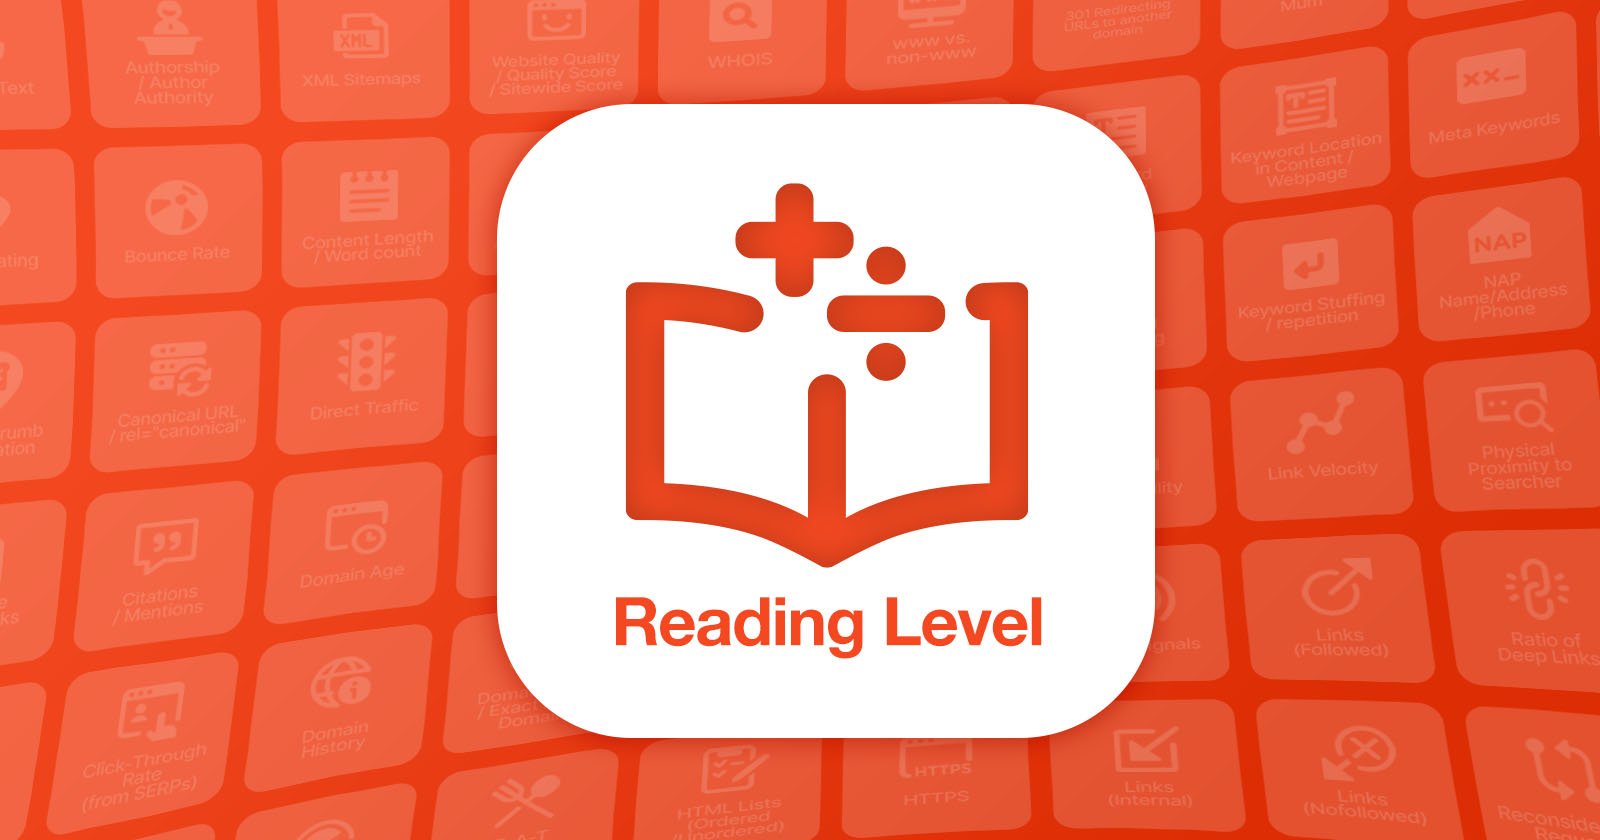 Is Reading Level A Google Ranking Factor? via @sejournal, @mirandalmwrites